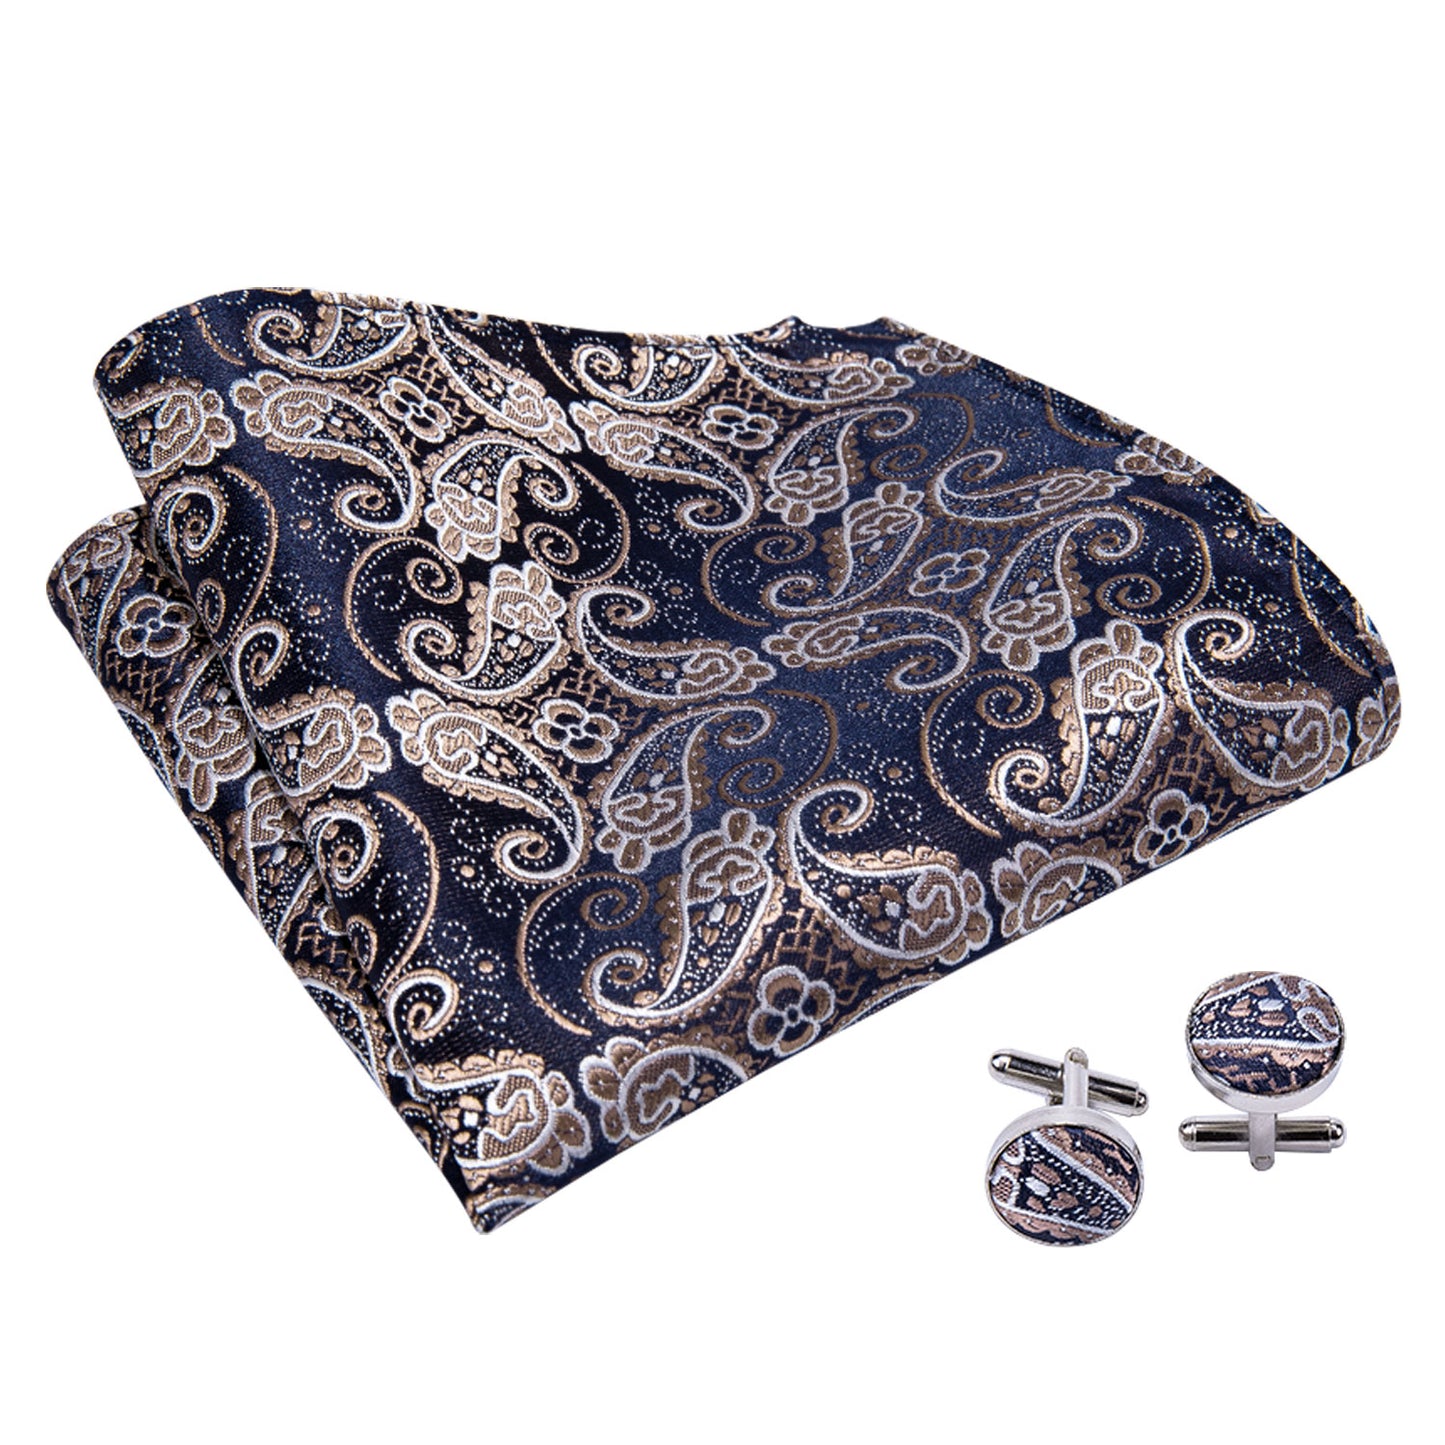 Victorian Ascot Silky Floral Day Cravat Set [Navy Paisley]